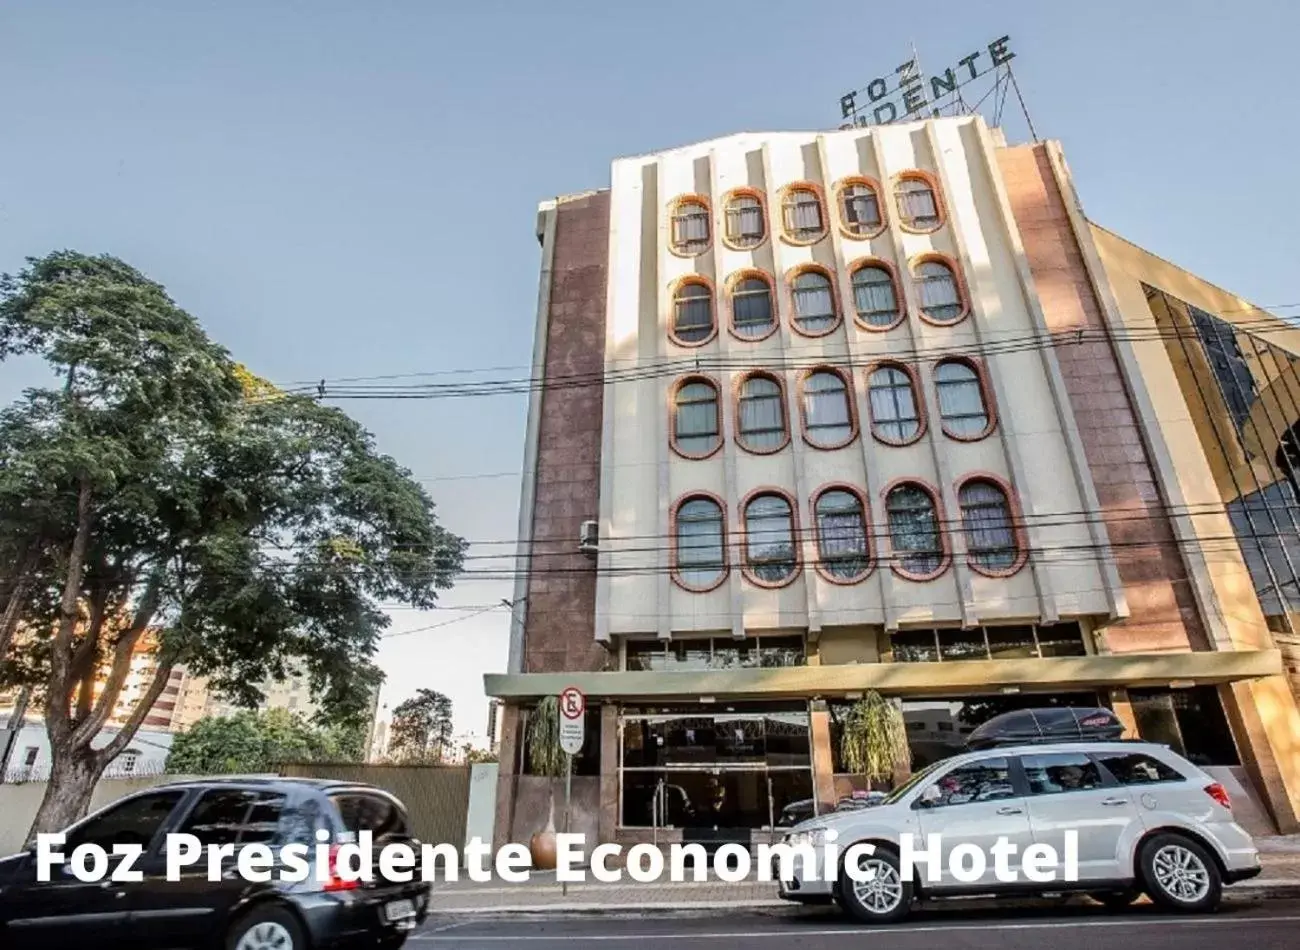 Facade/entrance, Property Building in Foz Presidente Economic Hotel